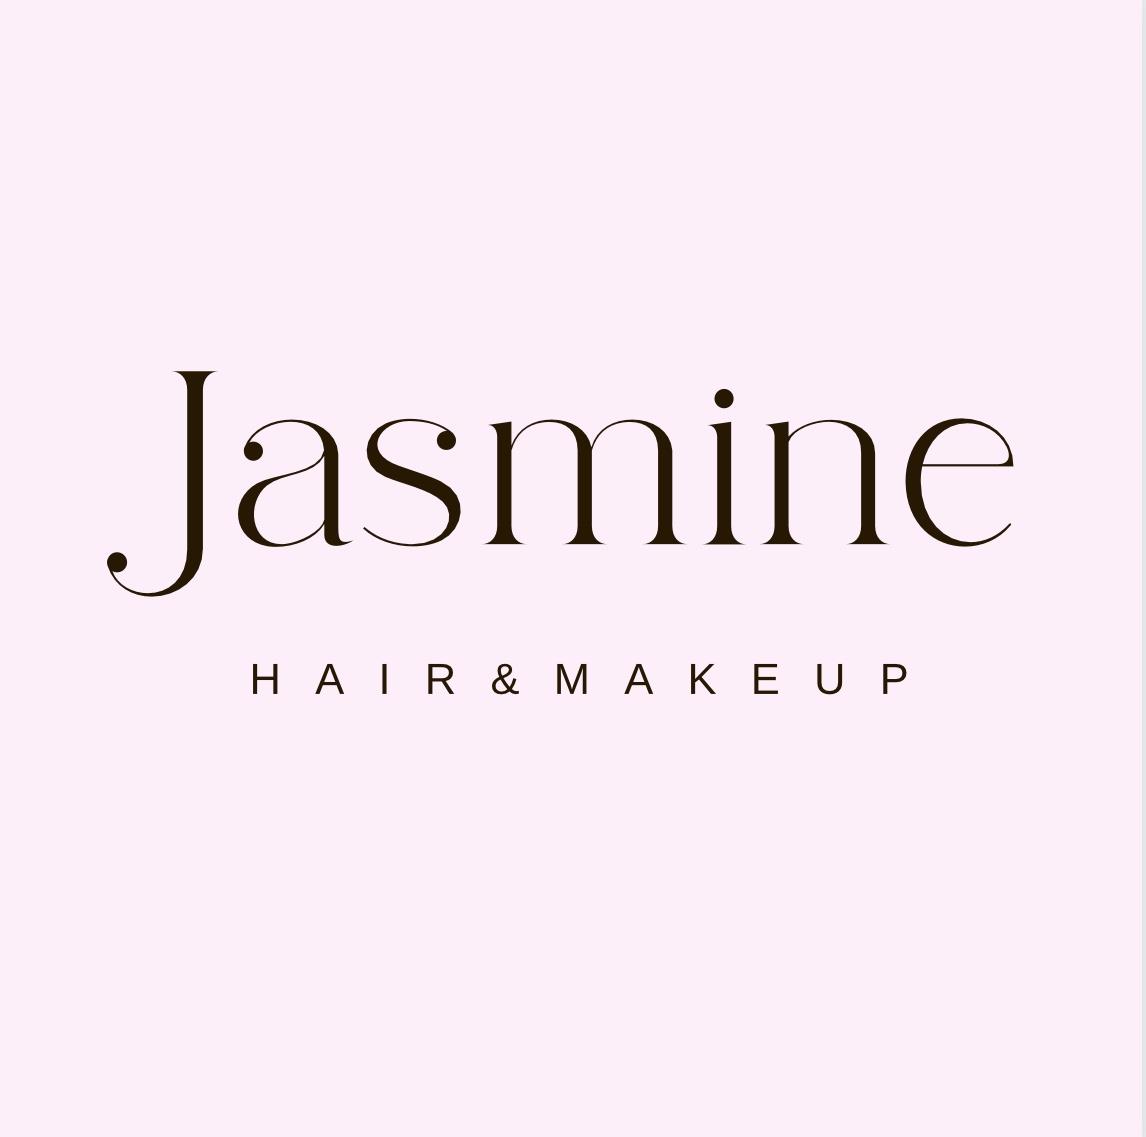 Jasmine Hair & Makeup